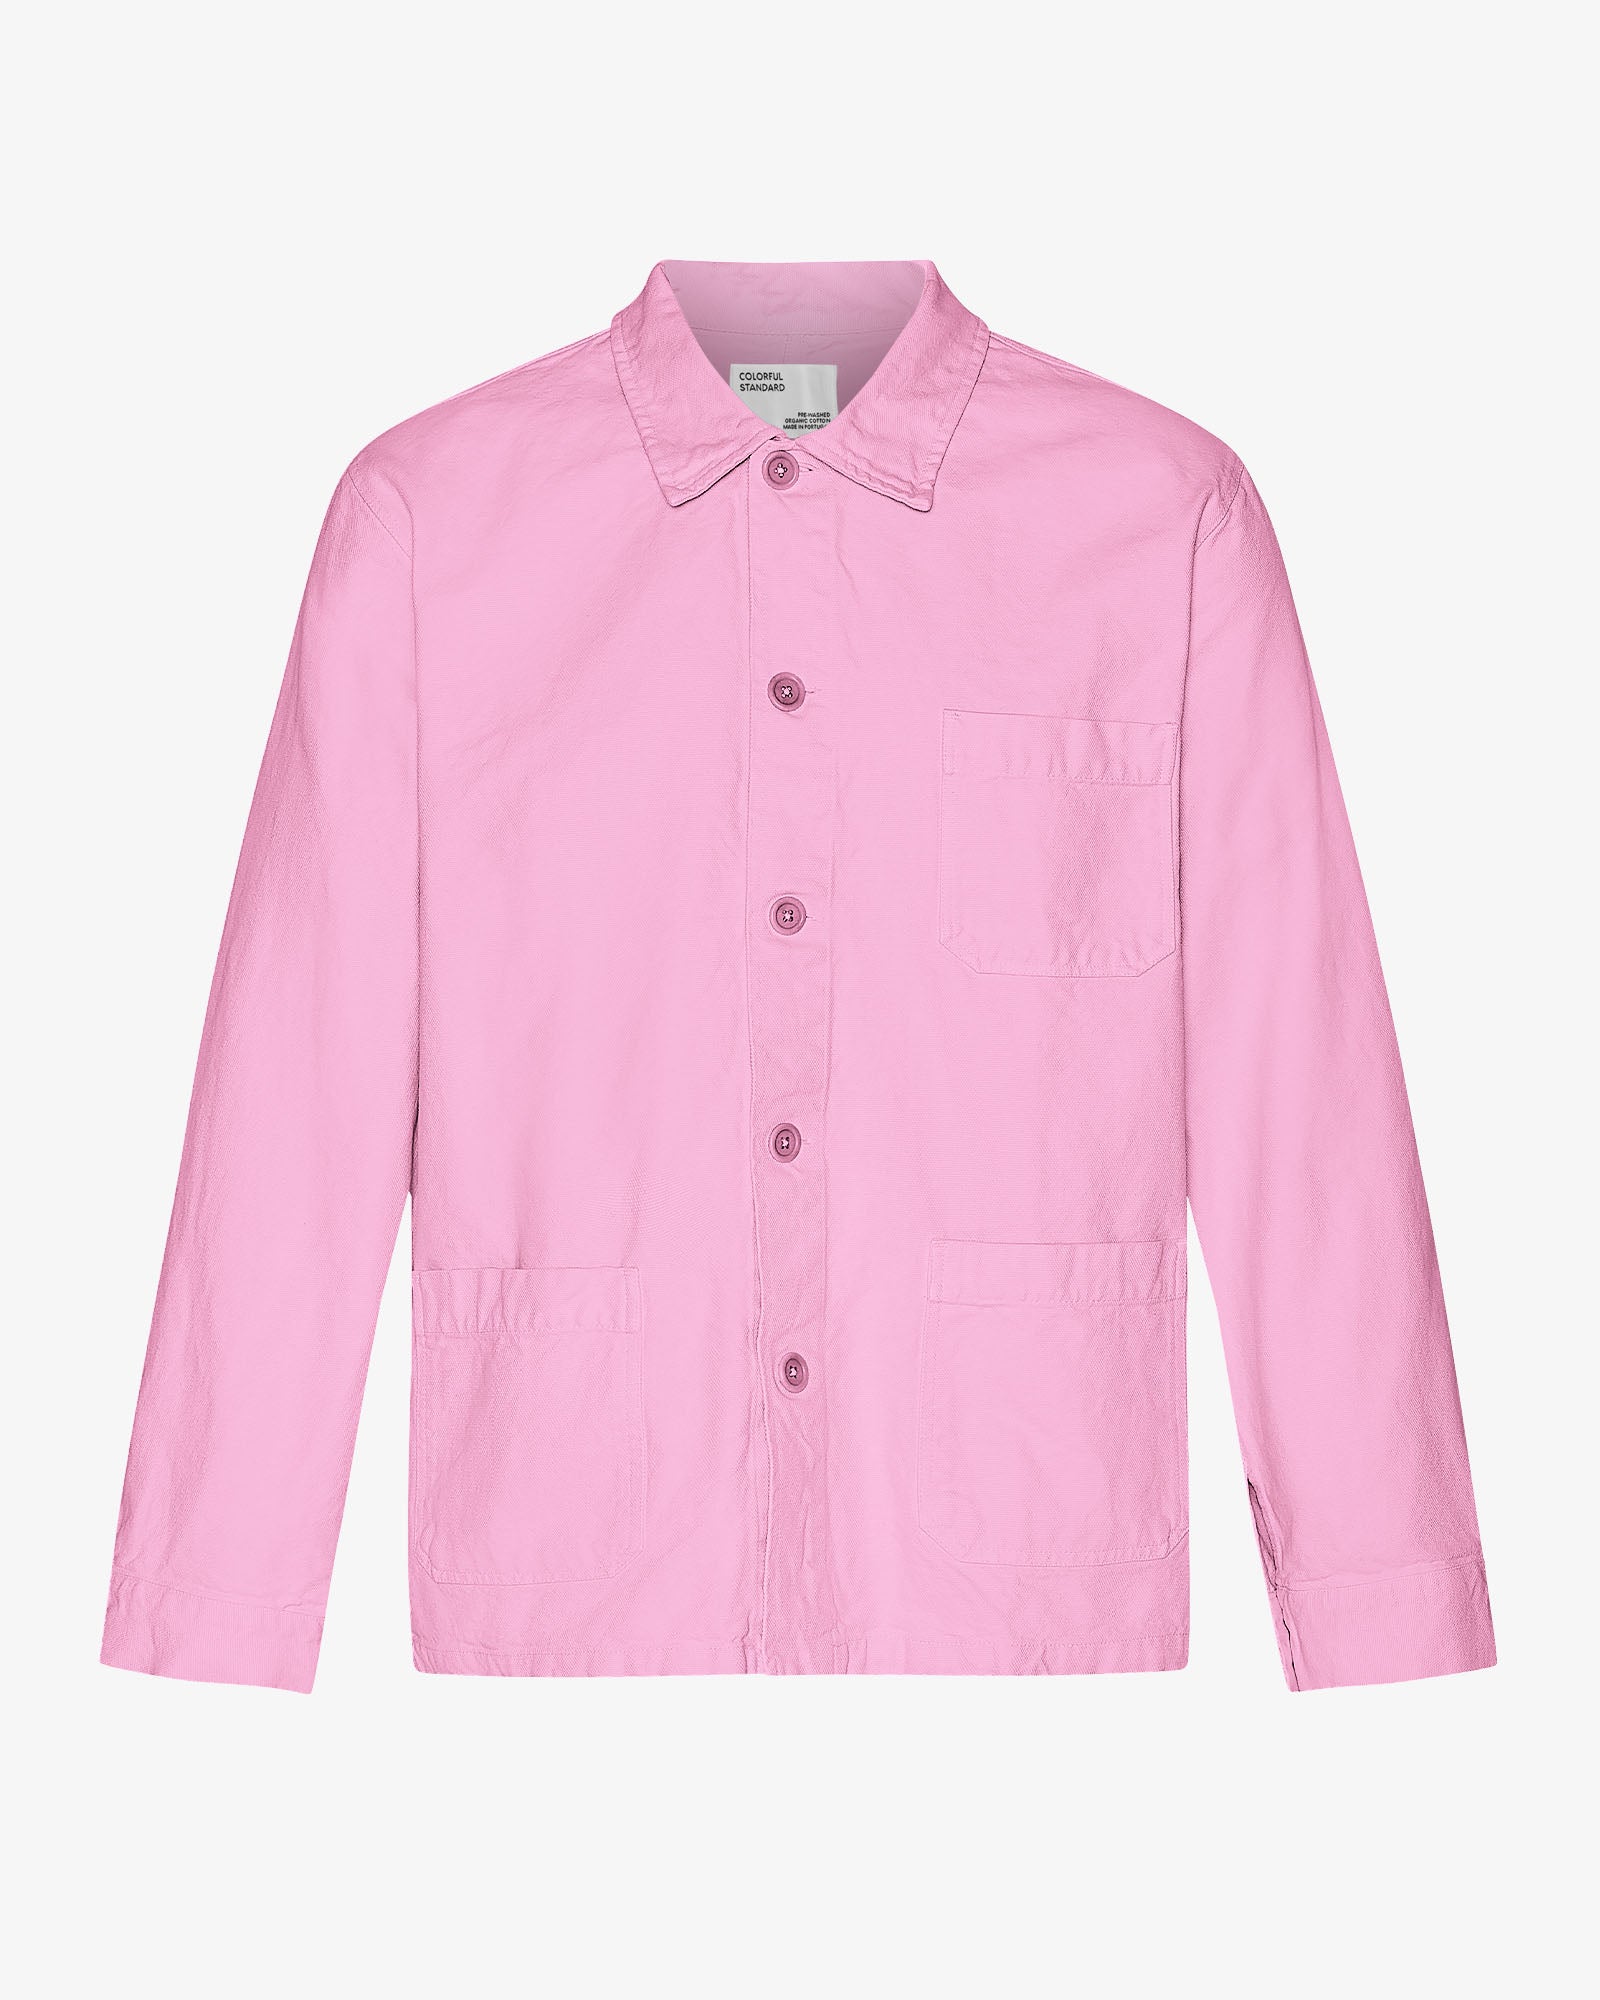 Organic Workwear Jacket - Flamingo Pink